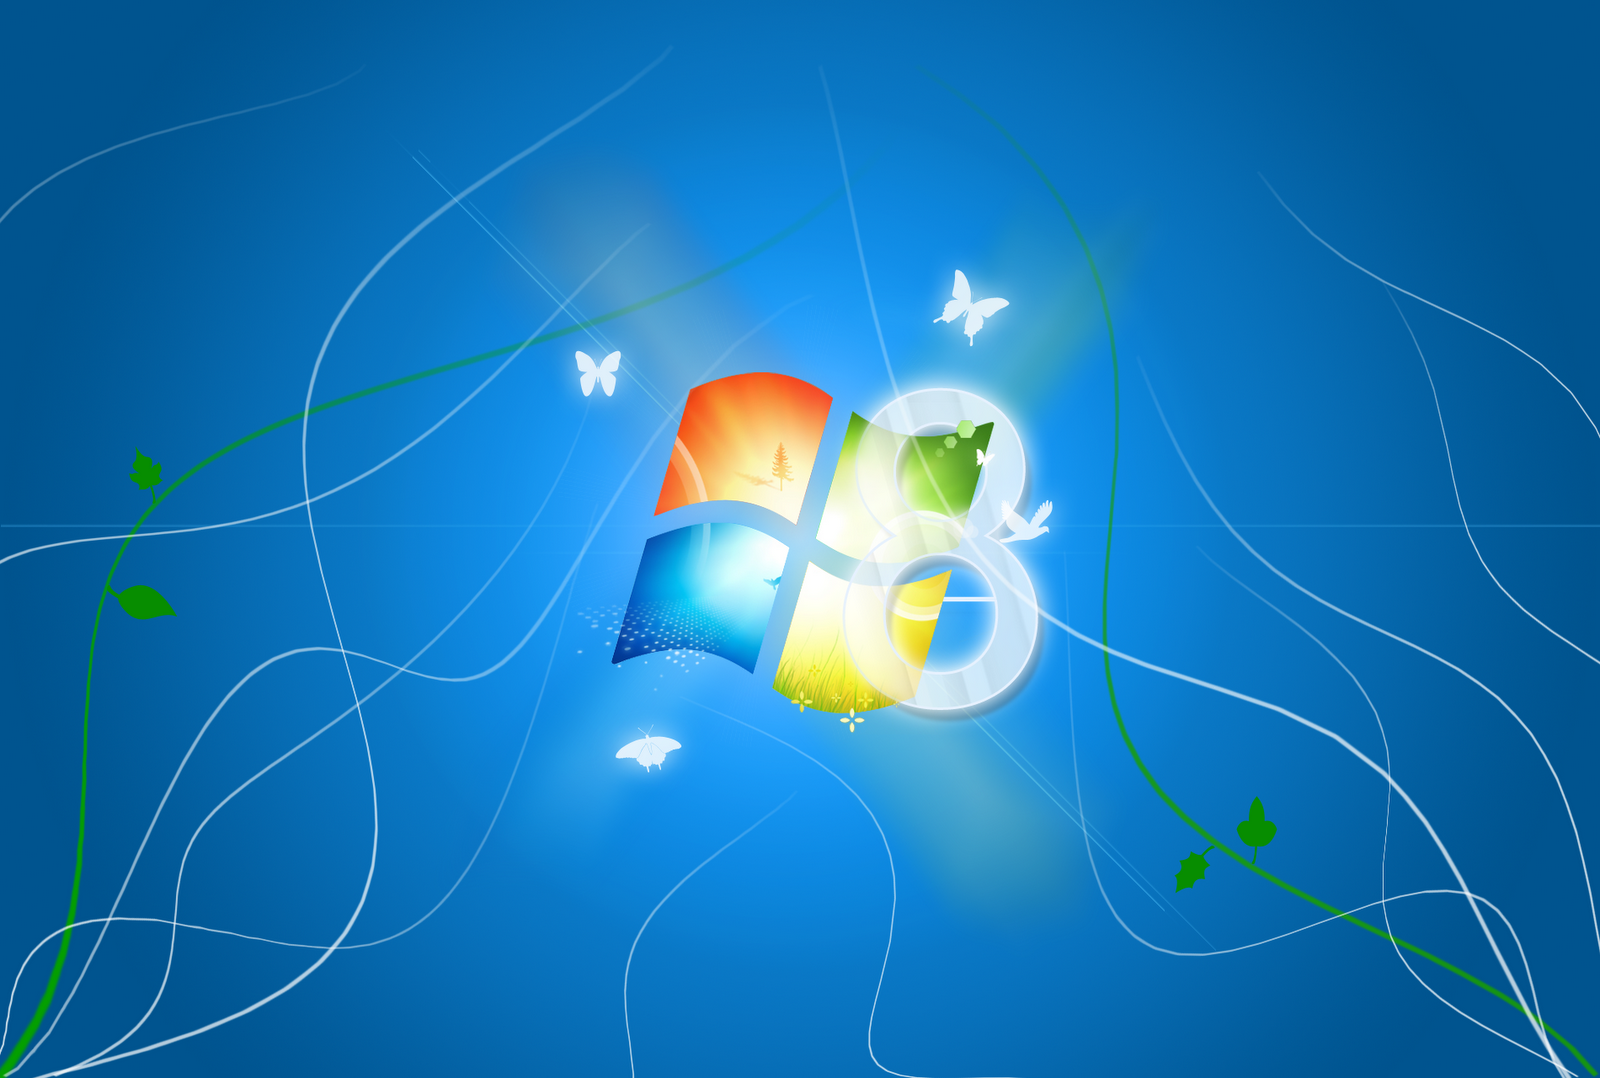 Windows Wallpaper HD Background For Desktop